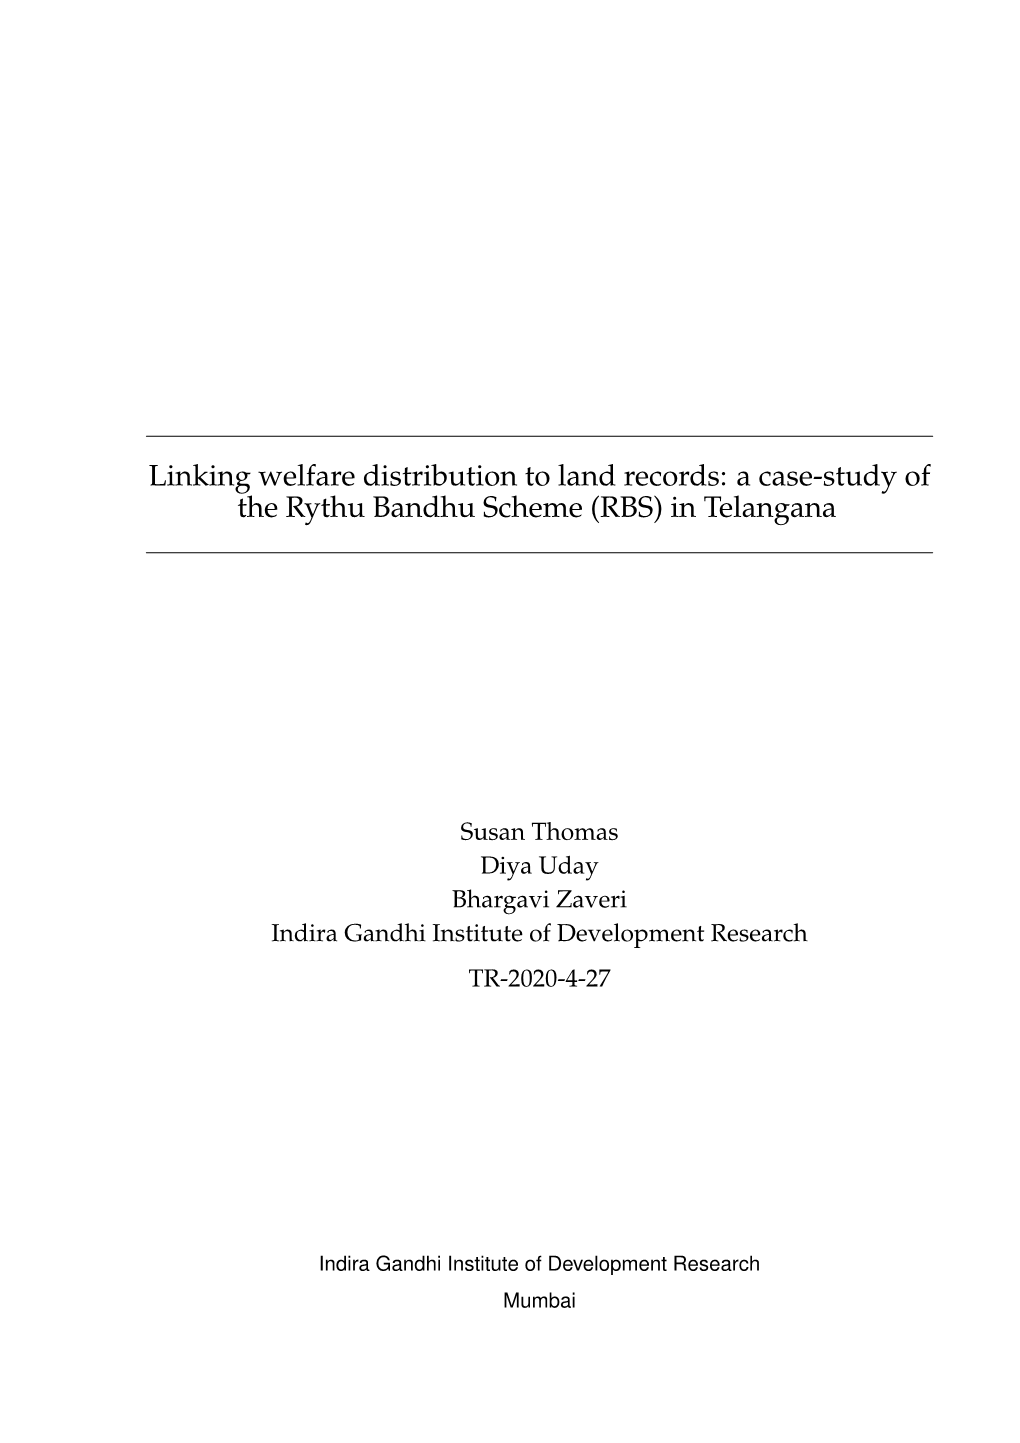 A Case-Study of the Rythu Bandhu Scheme (RBS) in Telangana